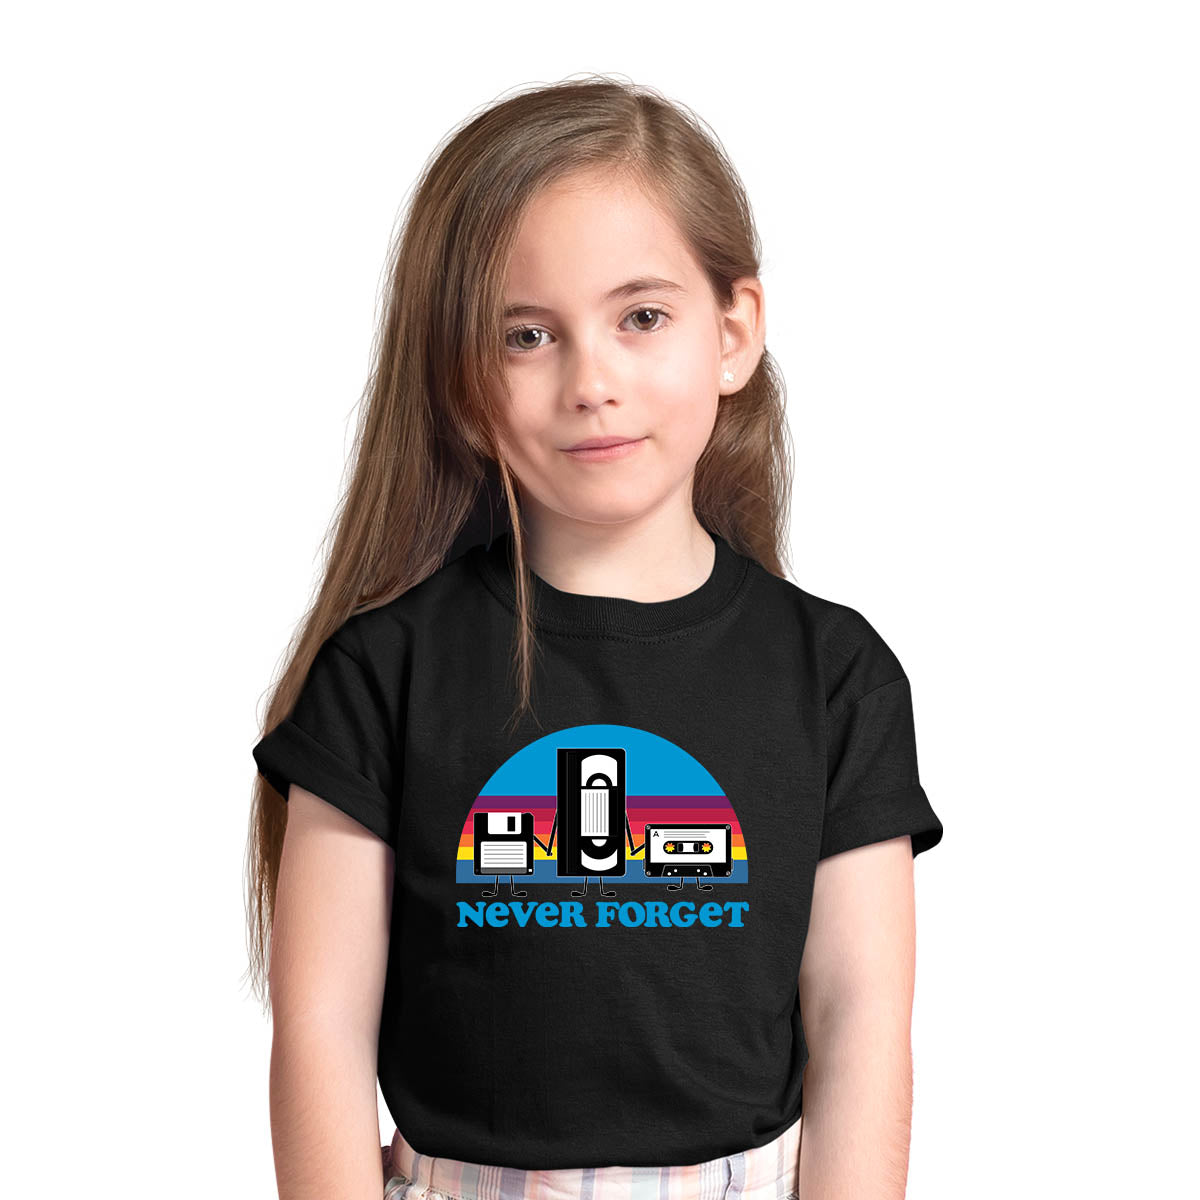 Vintage Never Forget Shirt Funny Retro Floppy Disk VHS Tee Black T-shirt for Kids